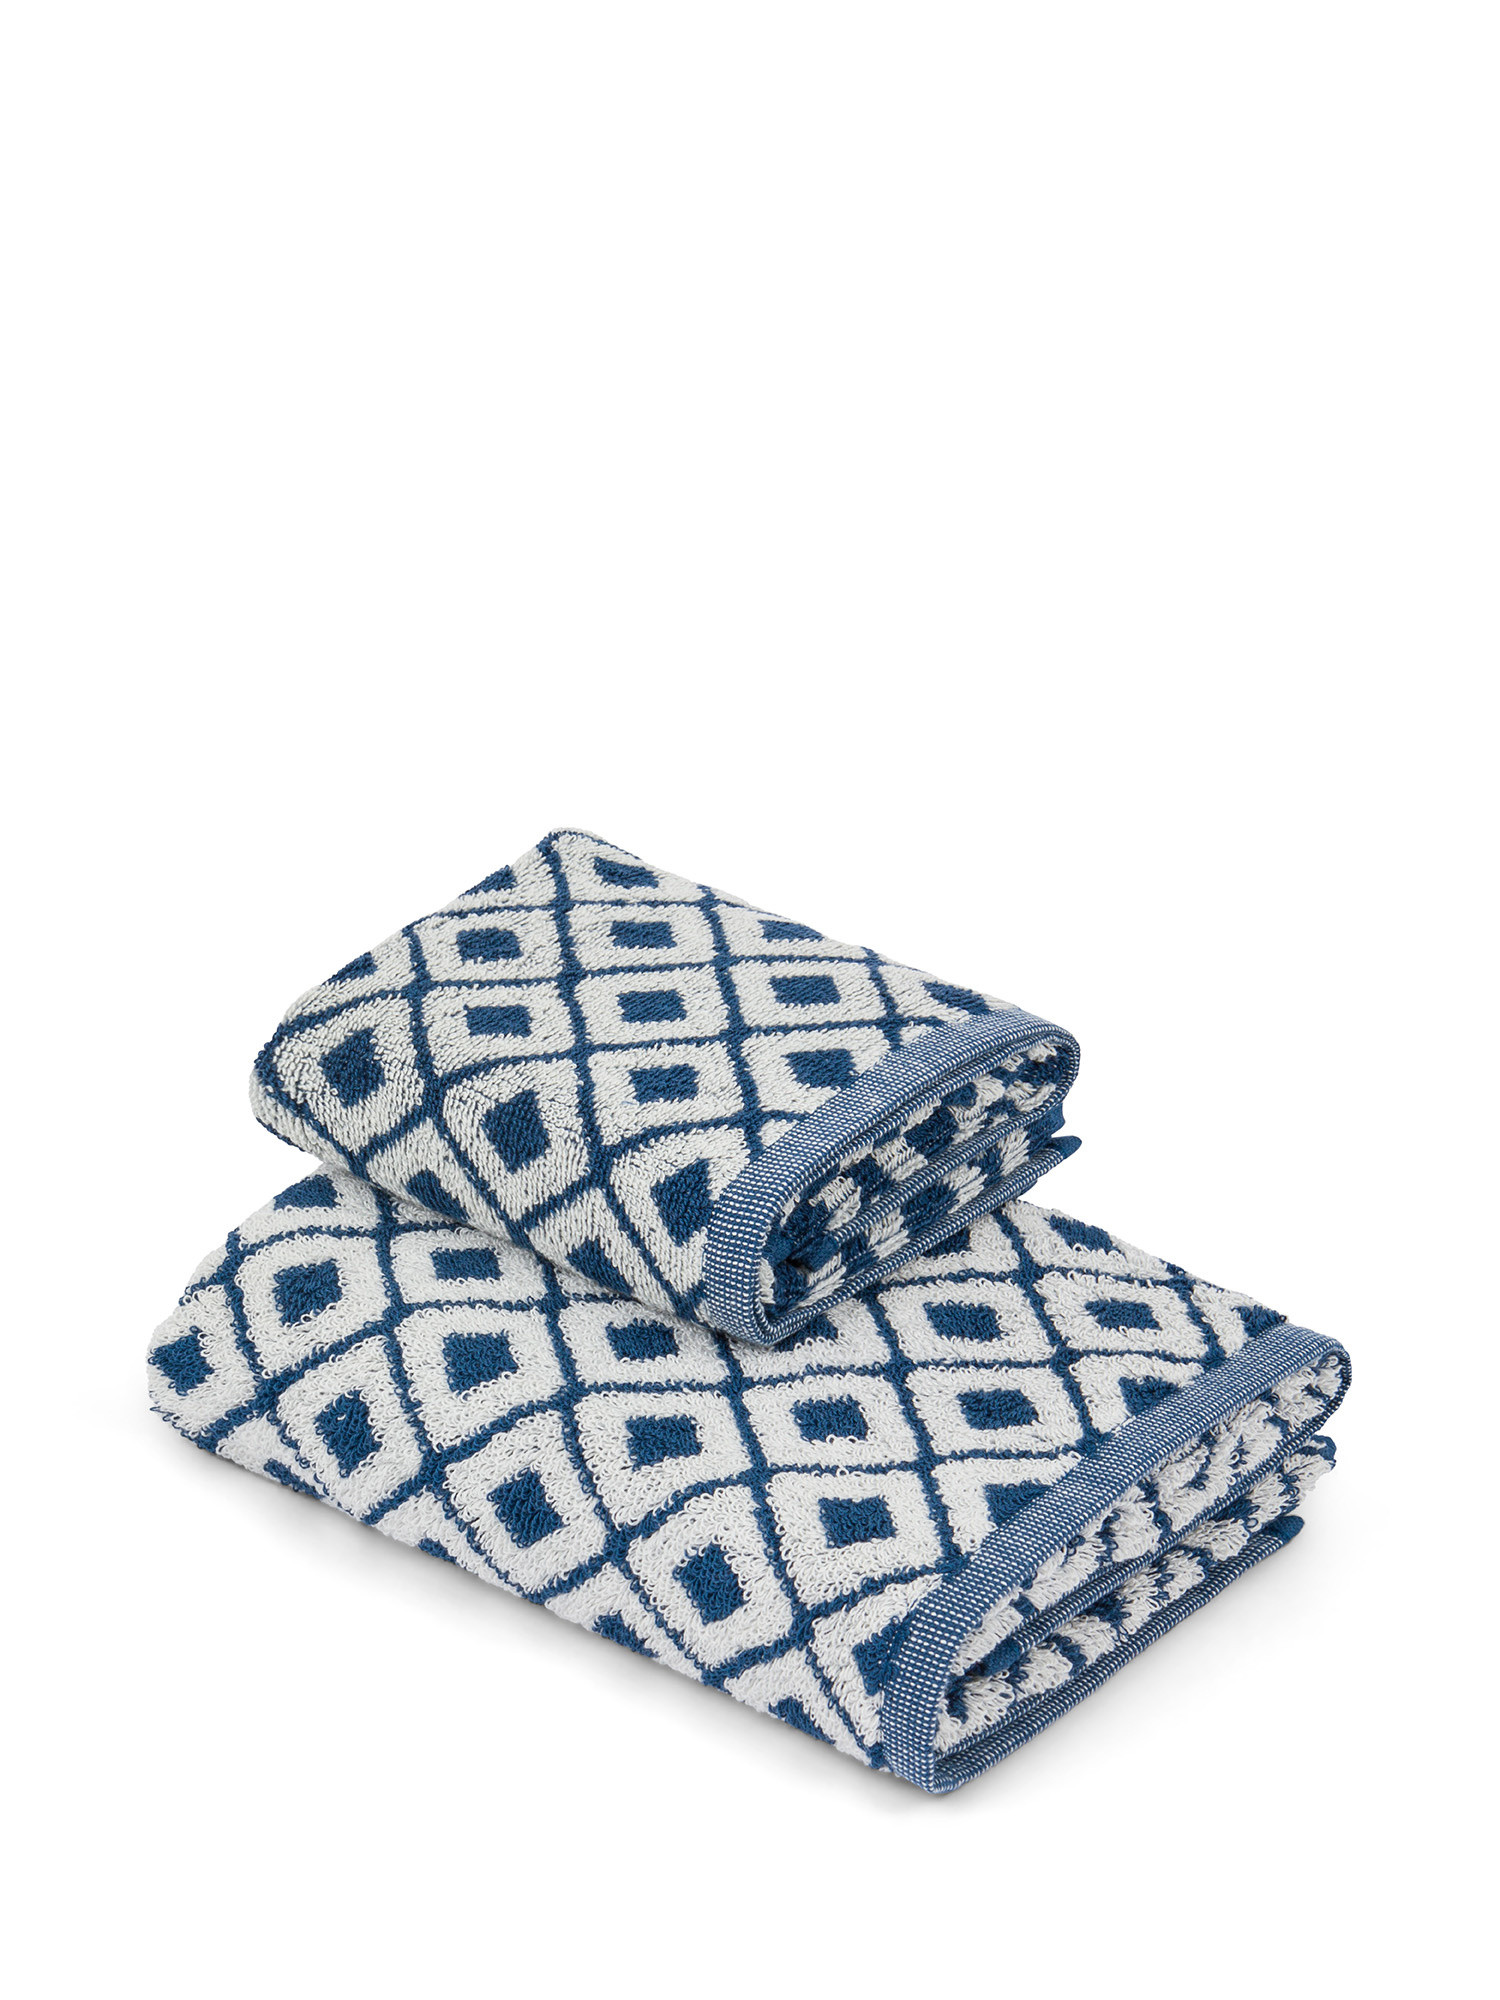 Asciugamano in spugna di cotone motivo quadri, Blu, large image number 0